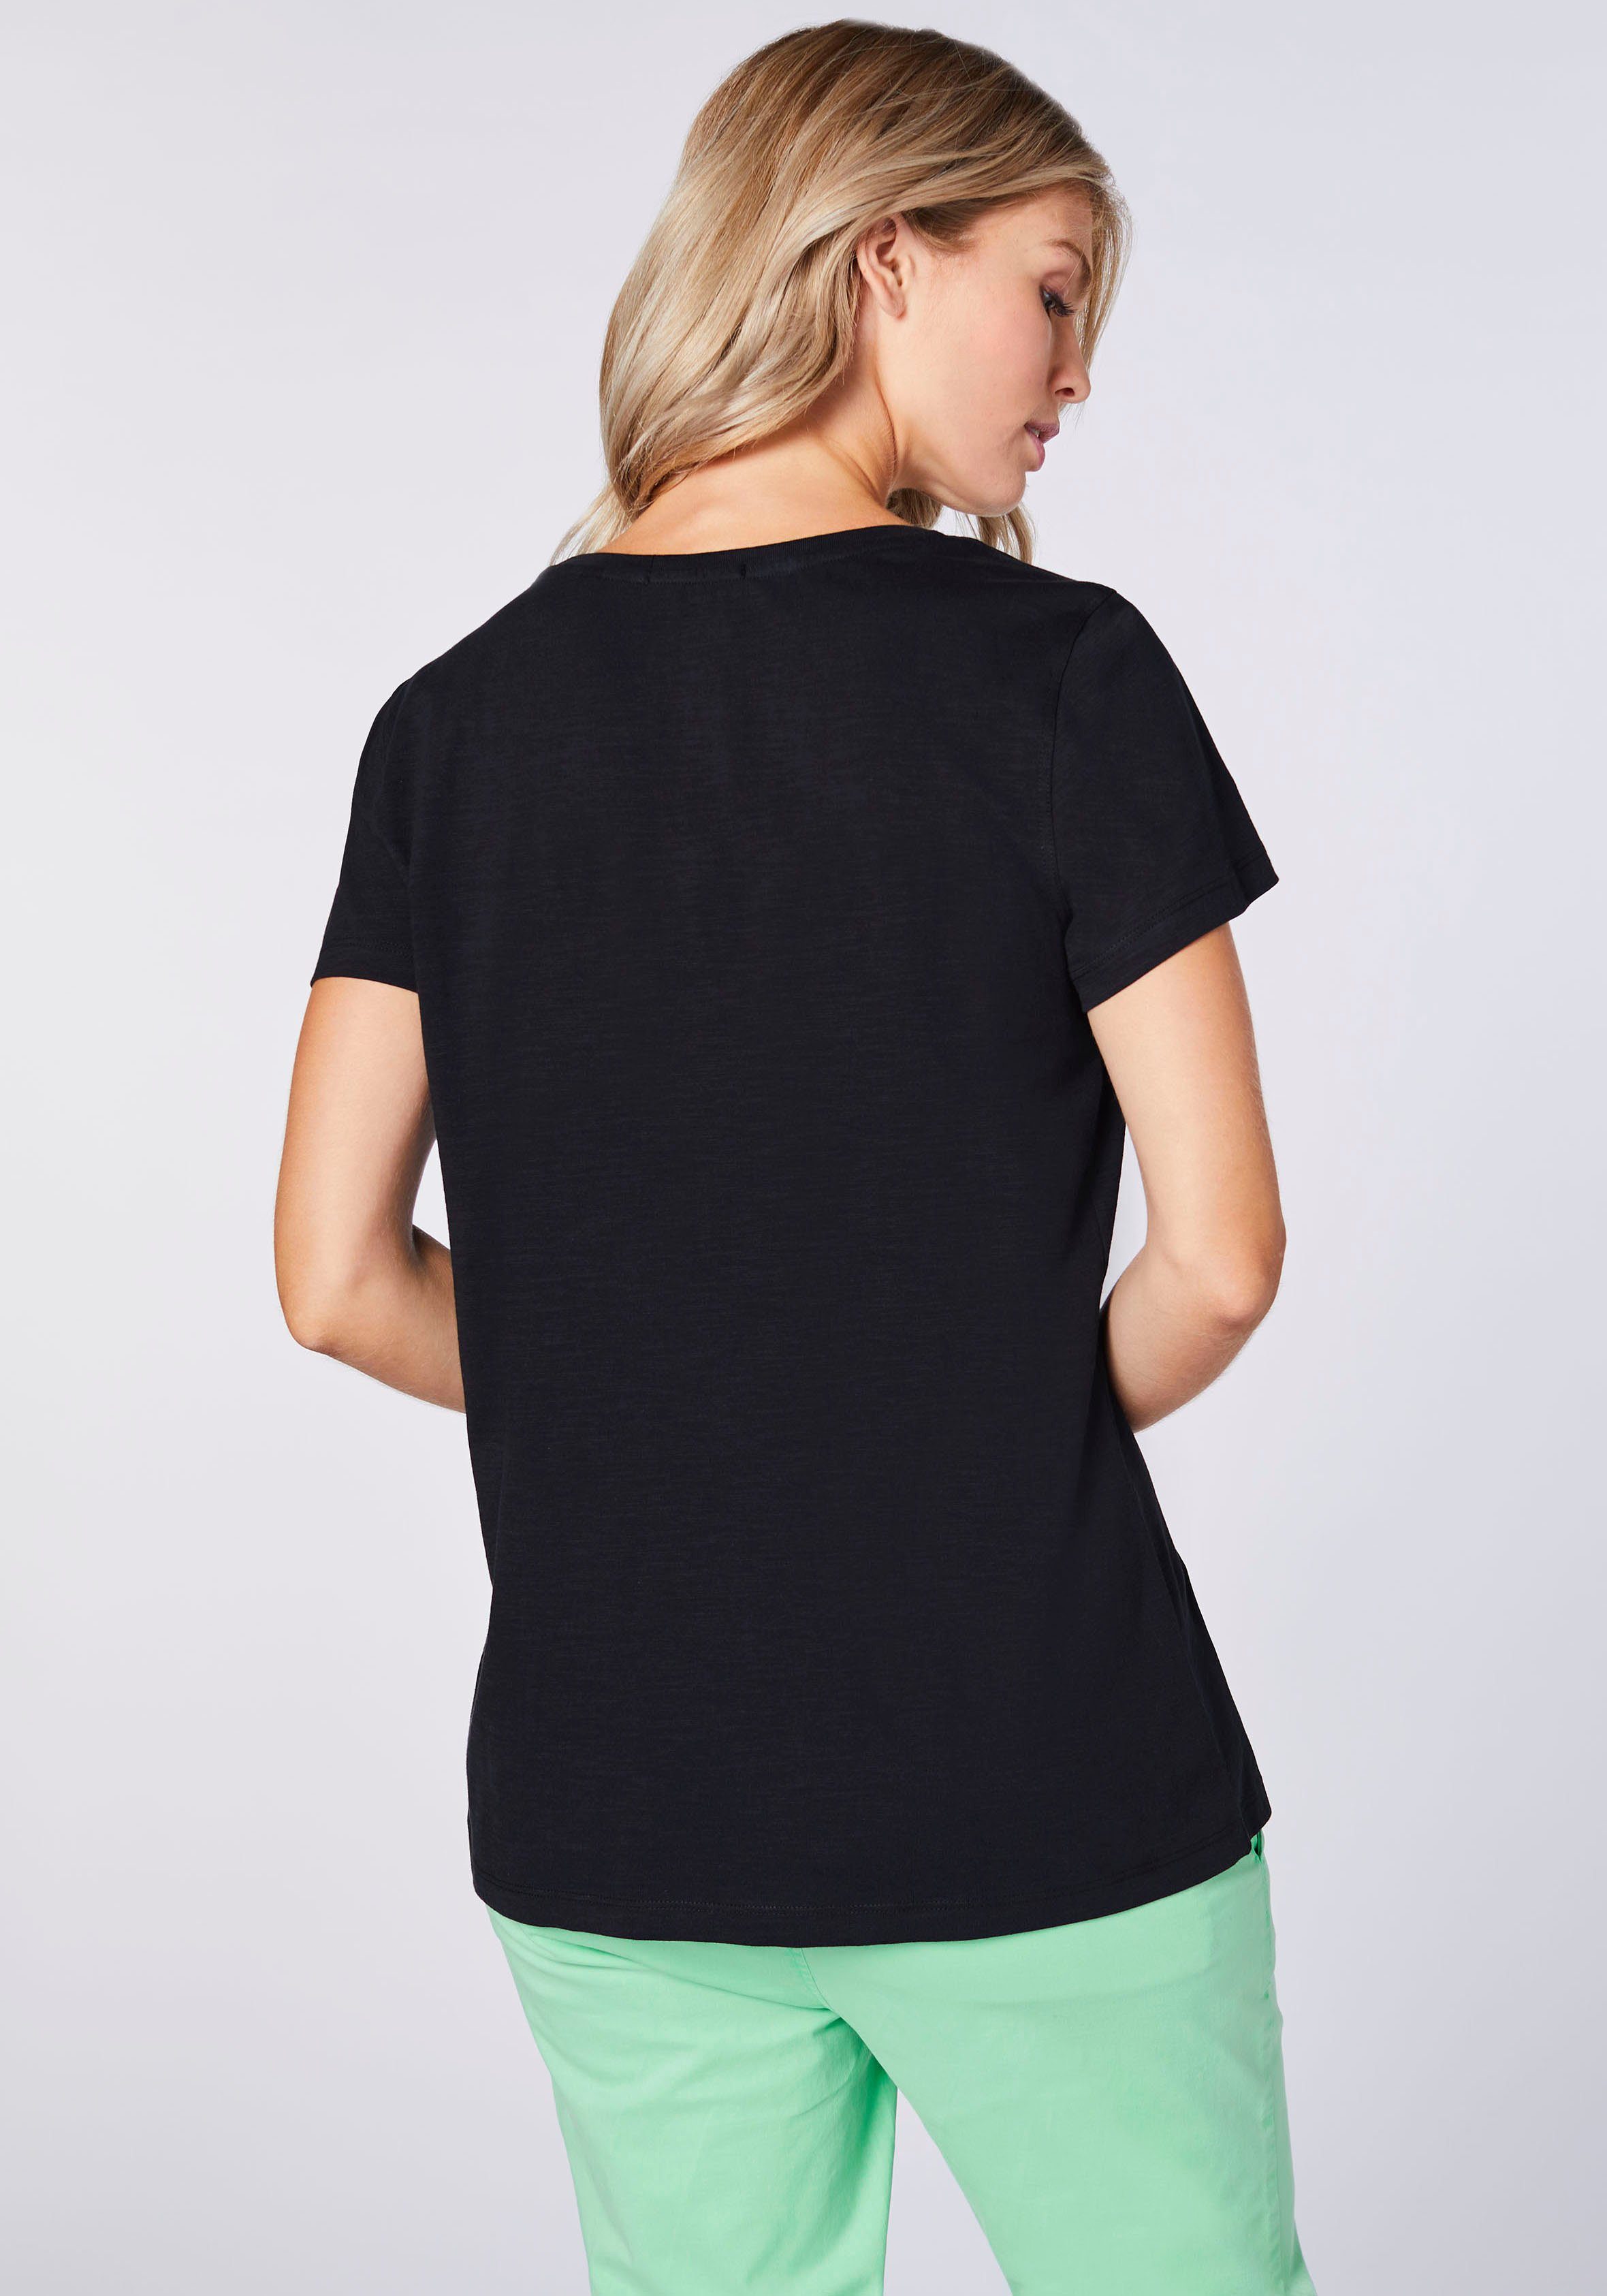 Chiemsee Black T-Shirt Deep